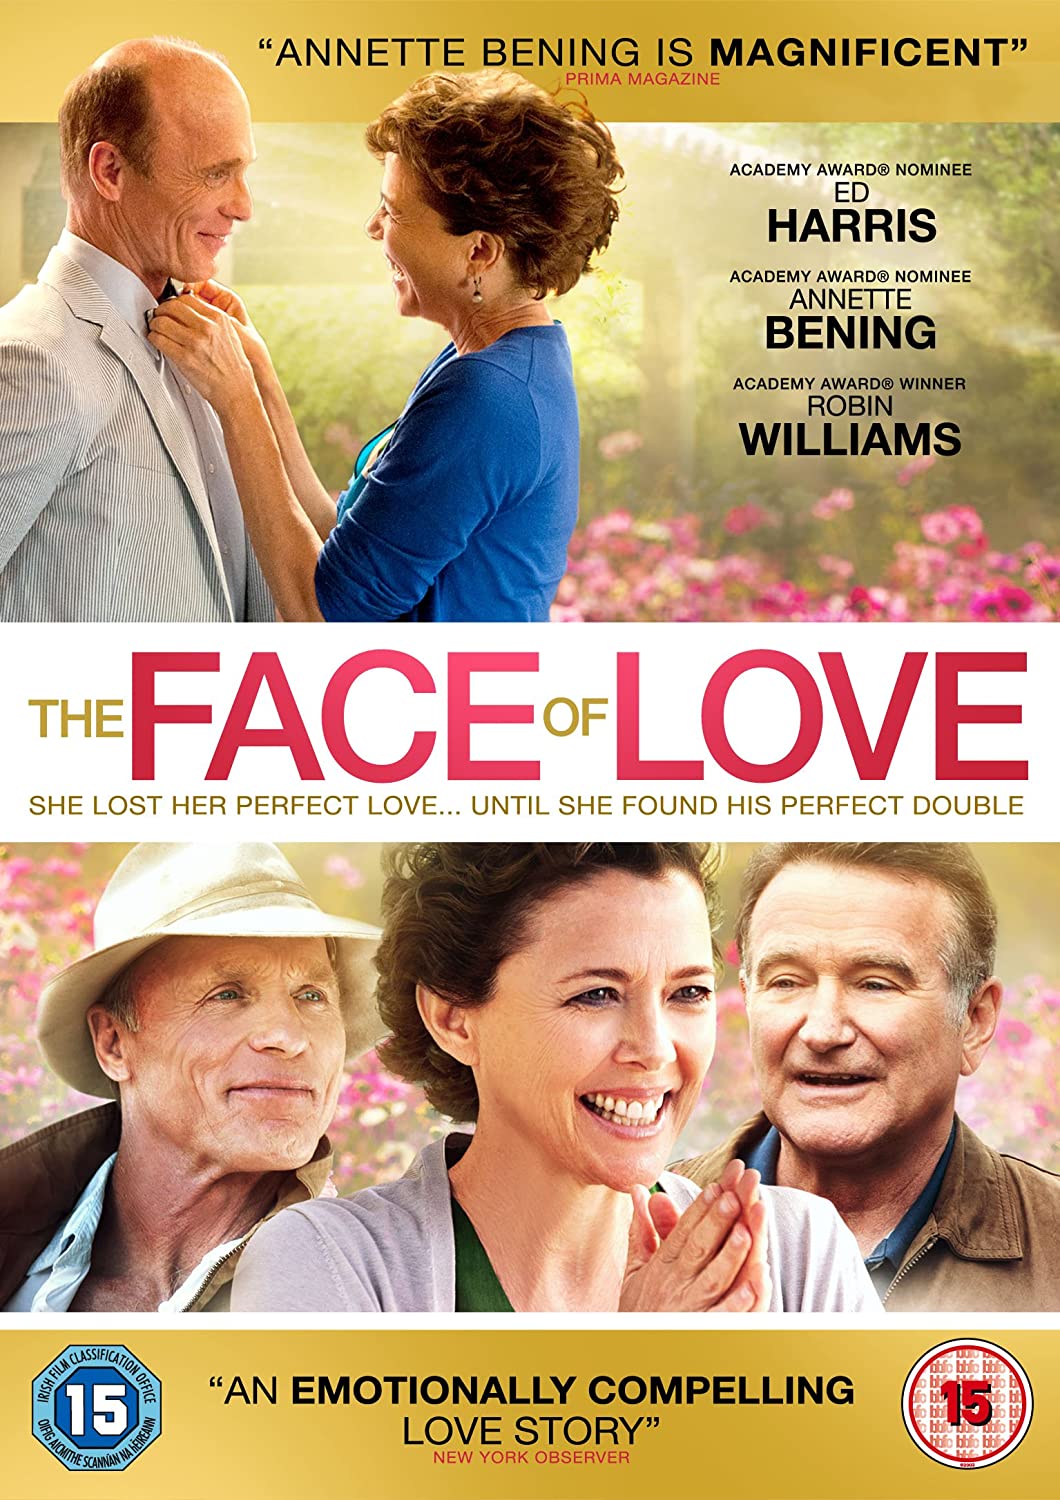 The Face of Love [2013] [2017] - Romance/Drama [DVD]